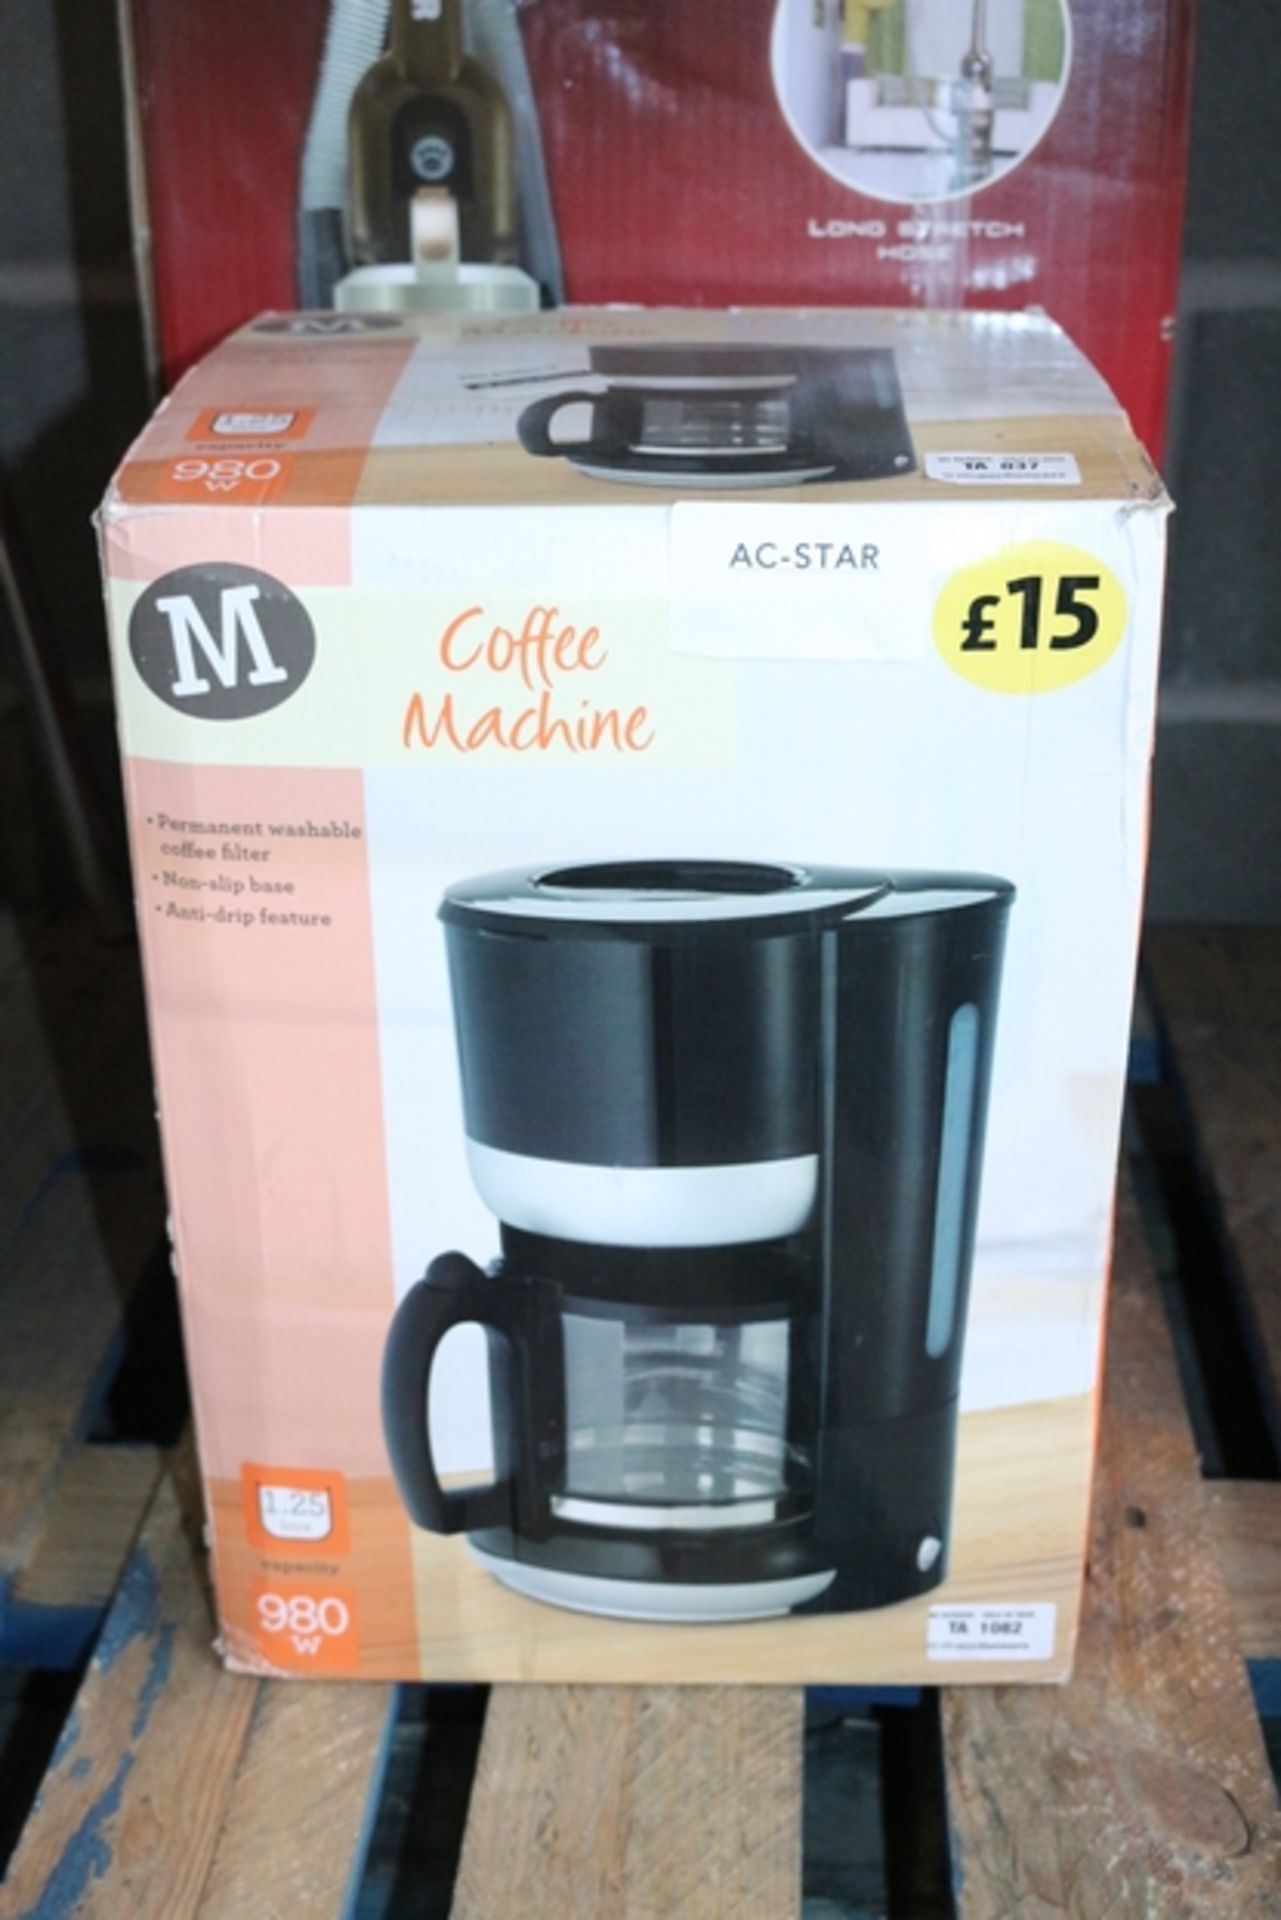 1X BOXED COFFEE MACHINE (AC-STAR)